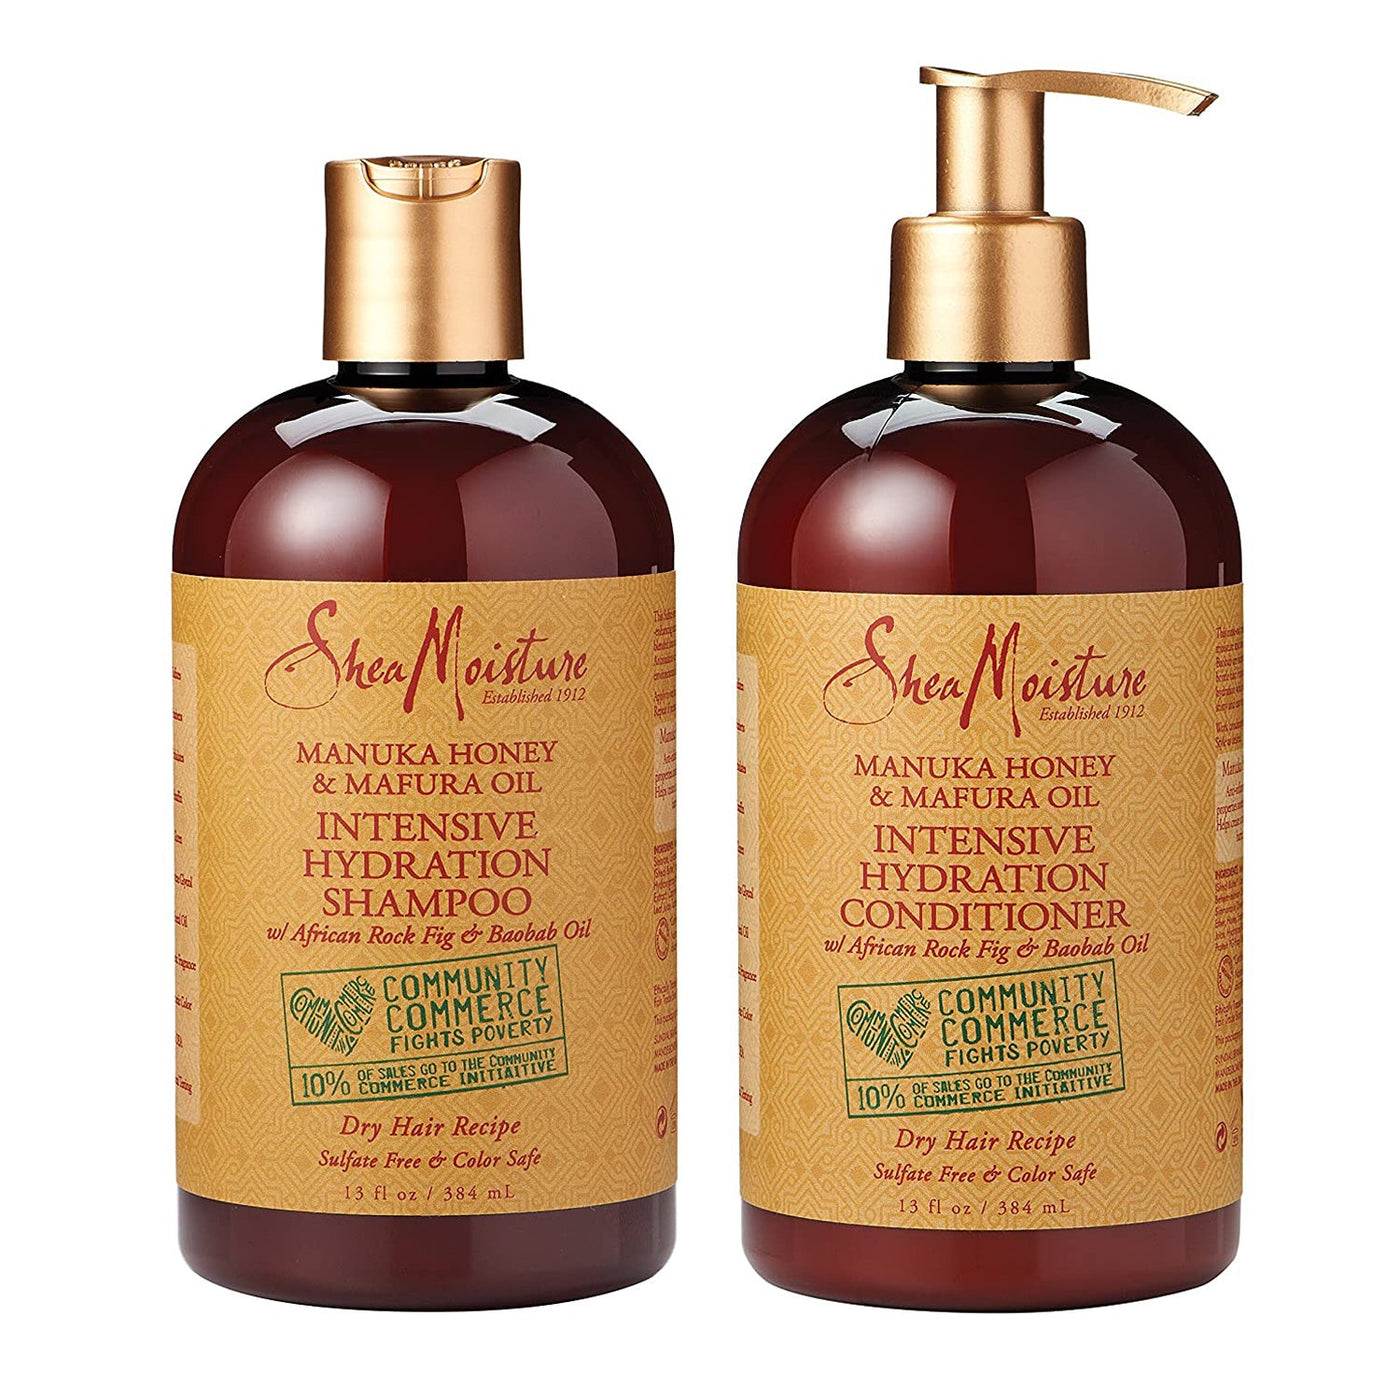 Shea Moisture Manuka Honey & Mafura Oil Intensive Hydration Shampoo & Conditioner Pack (384ml)